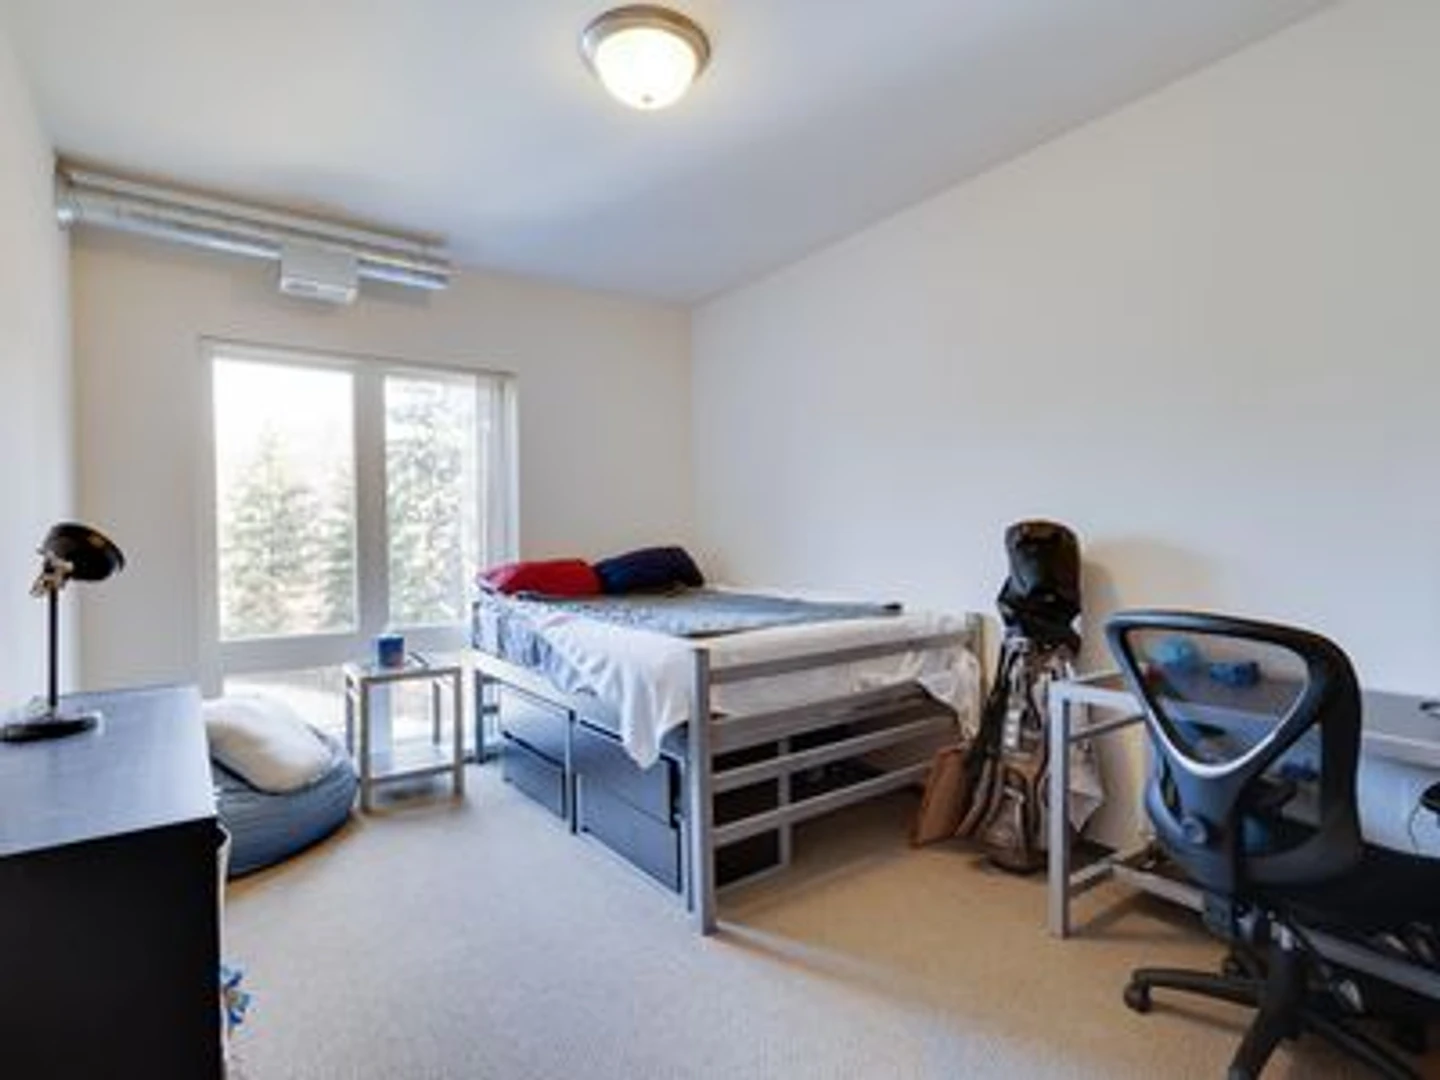 Cheap private room in Minneapolis